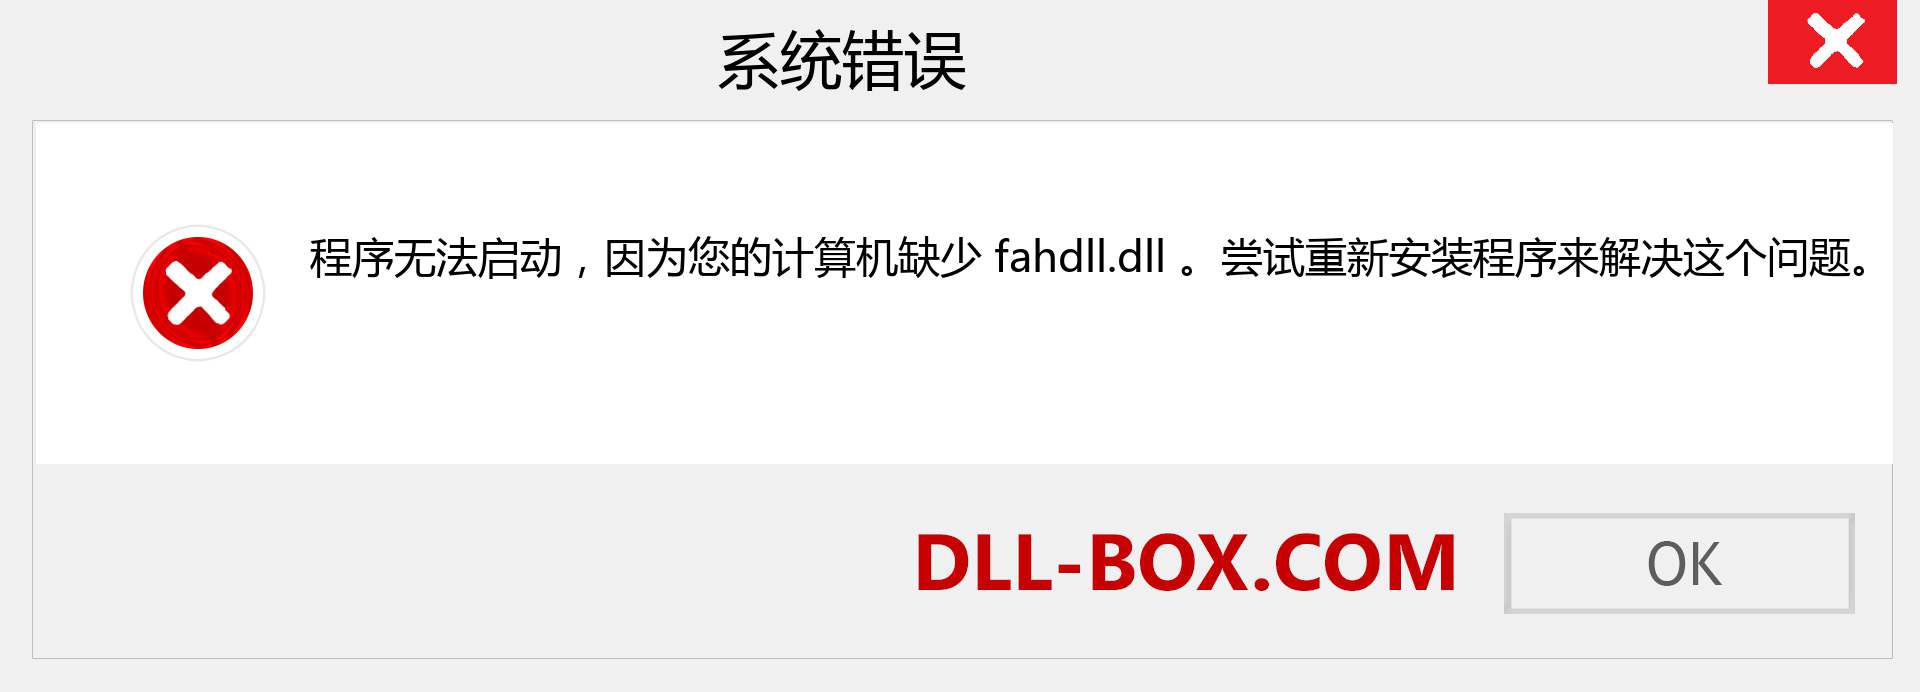 fahdll.dll 文件丢失？。 适用于 Windows 7、8、10 的下载 - 修复 Windows、照片、图像上的 fahdll dll 丢失错误